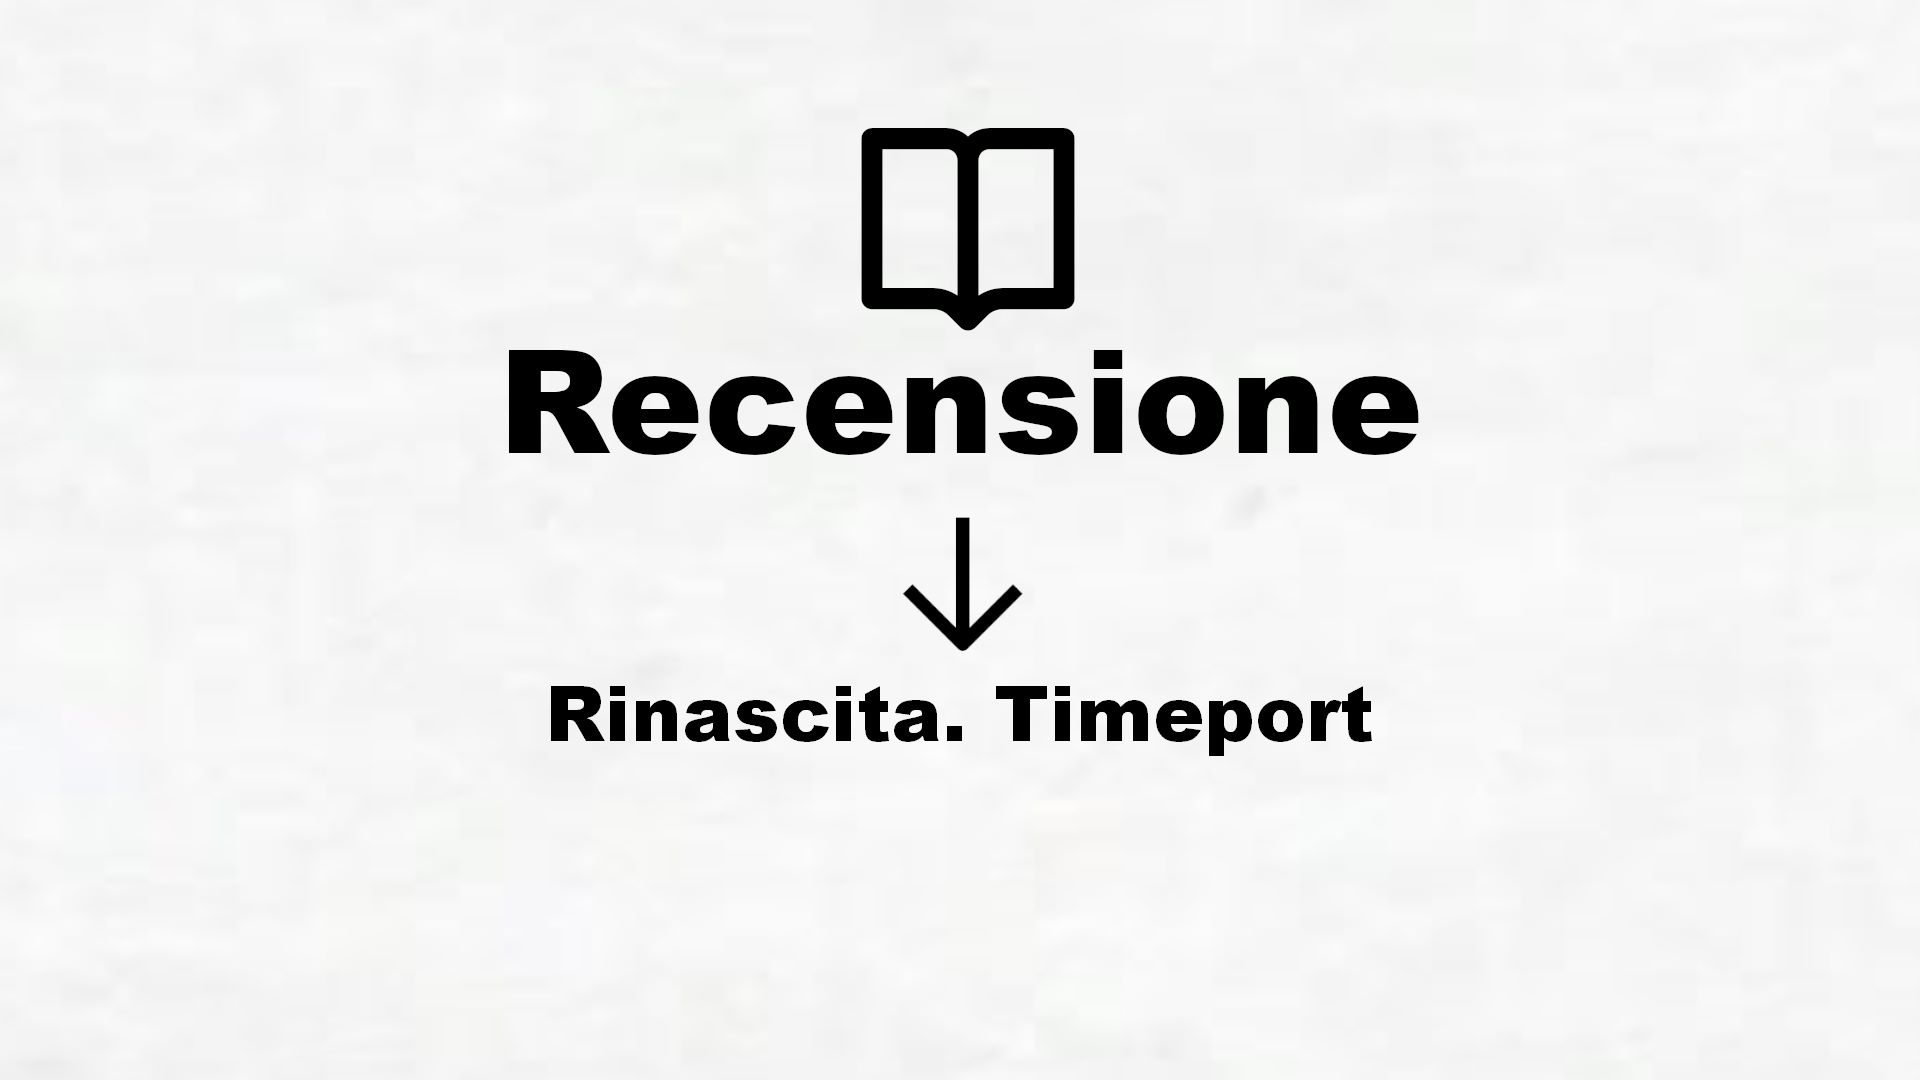 Rinascita. Timeport – Recensione Libro